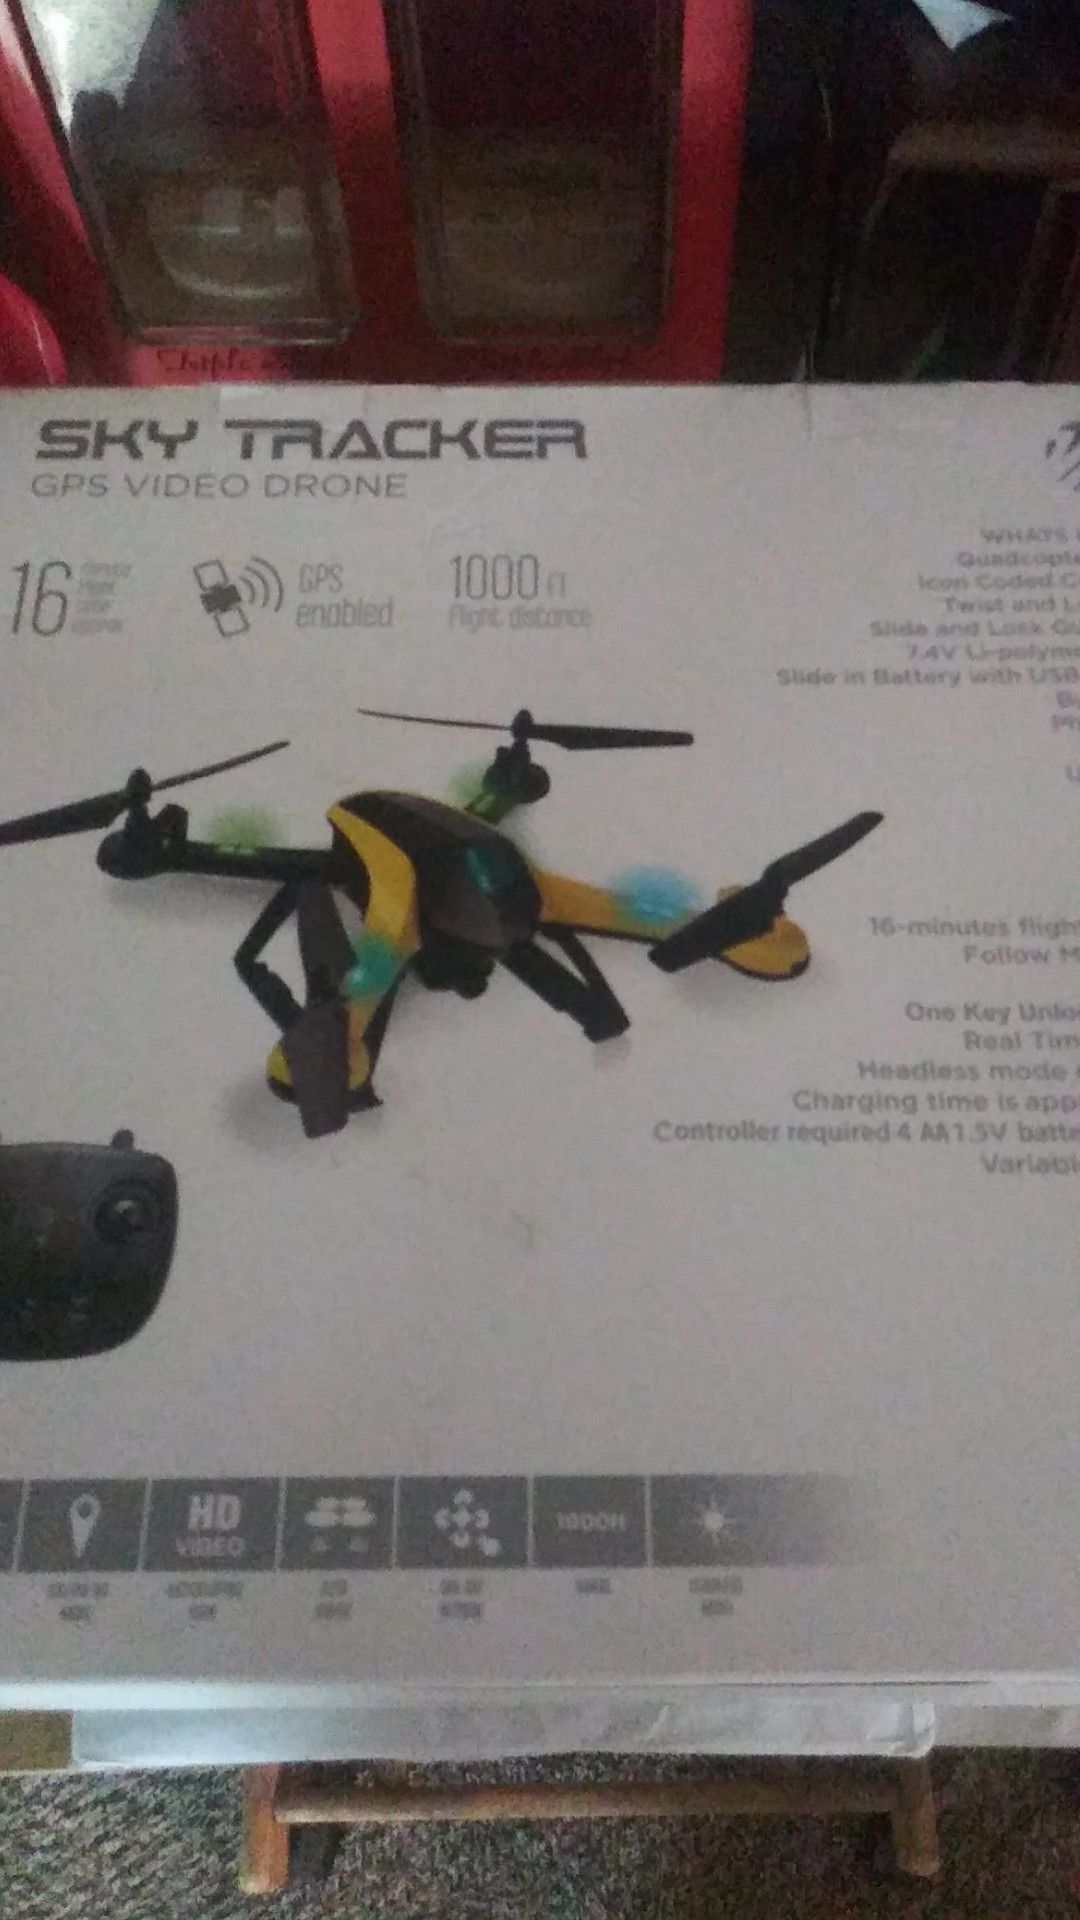 Skytracker GPS video drone